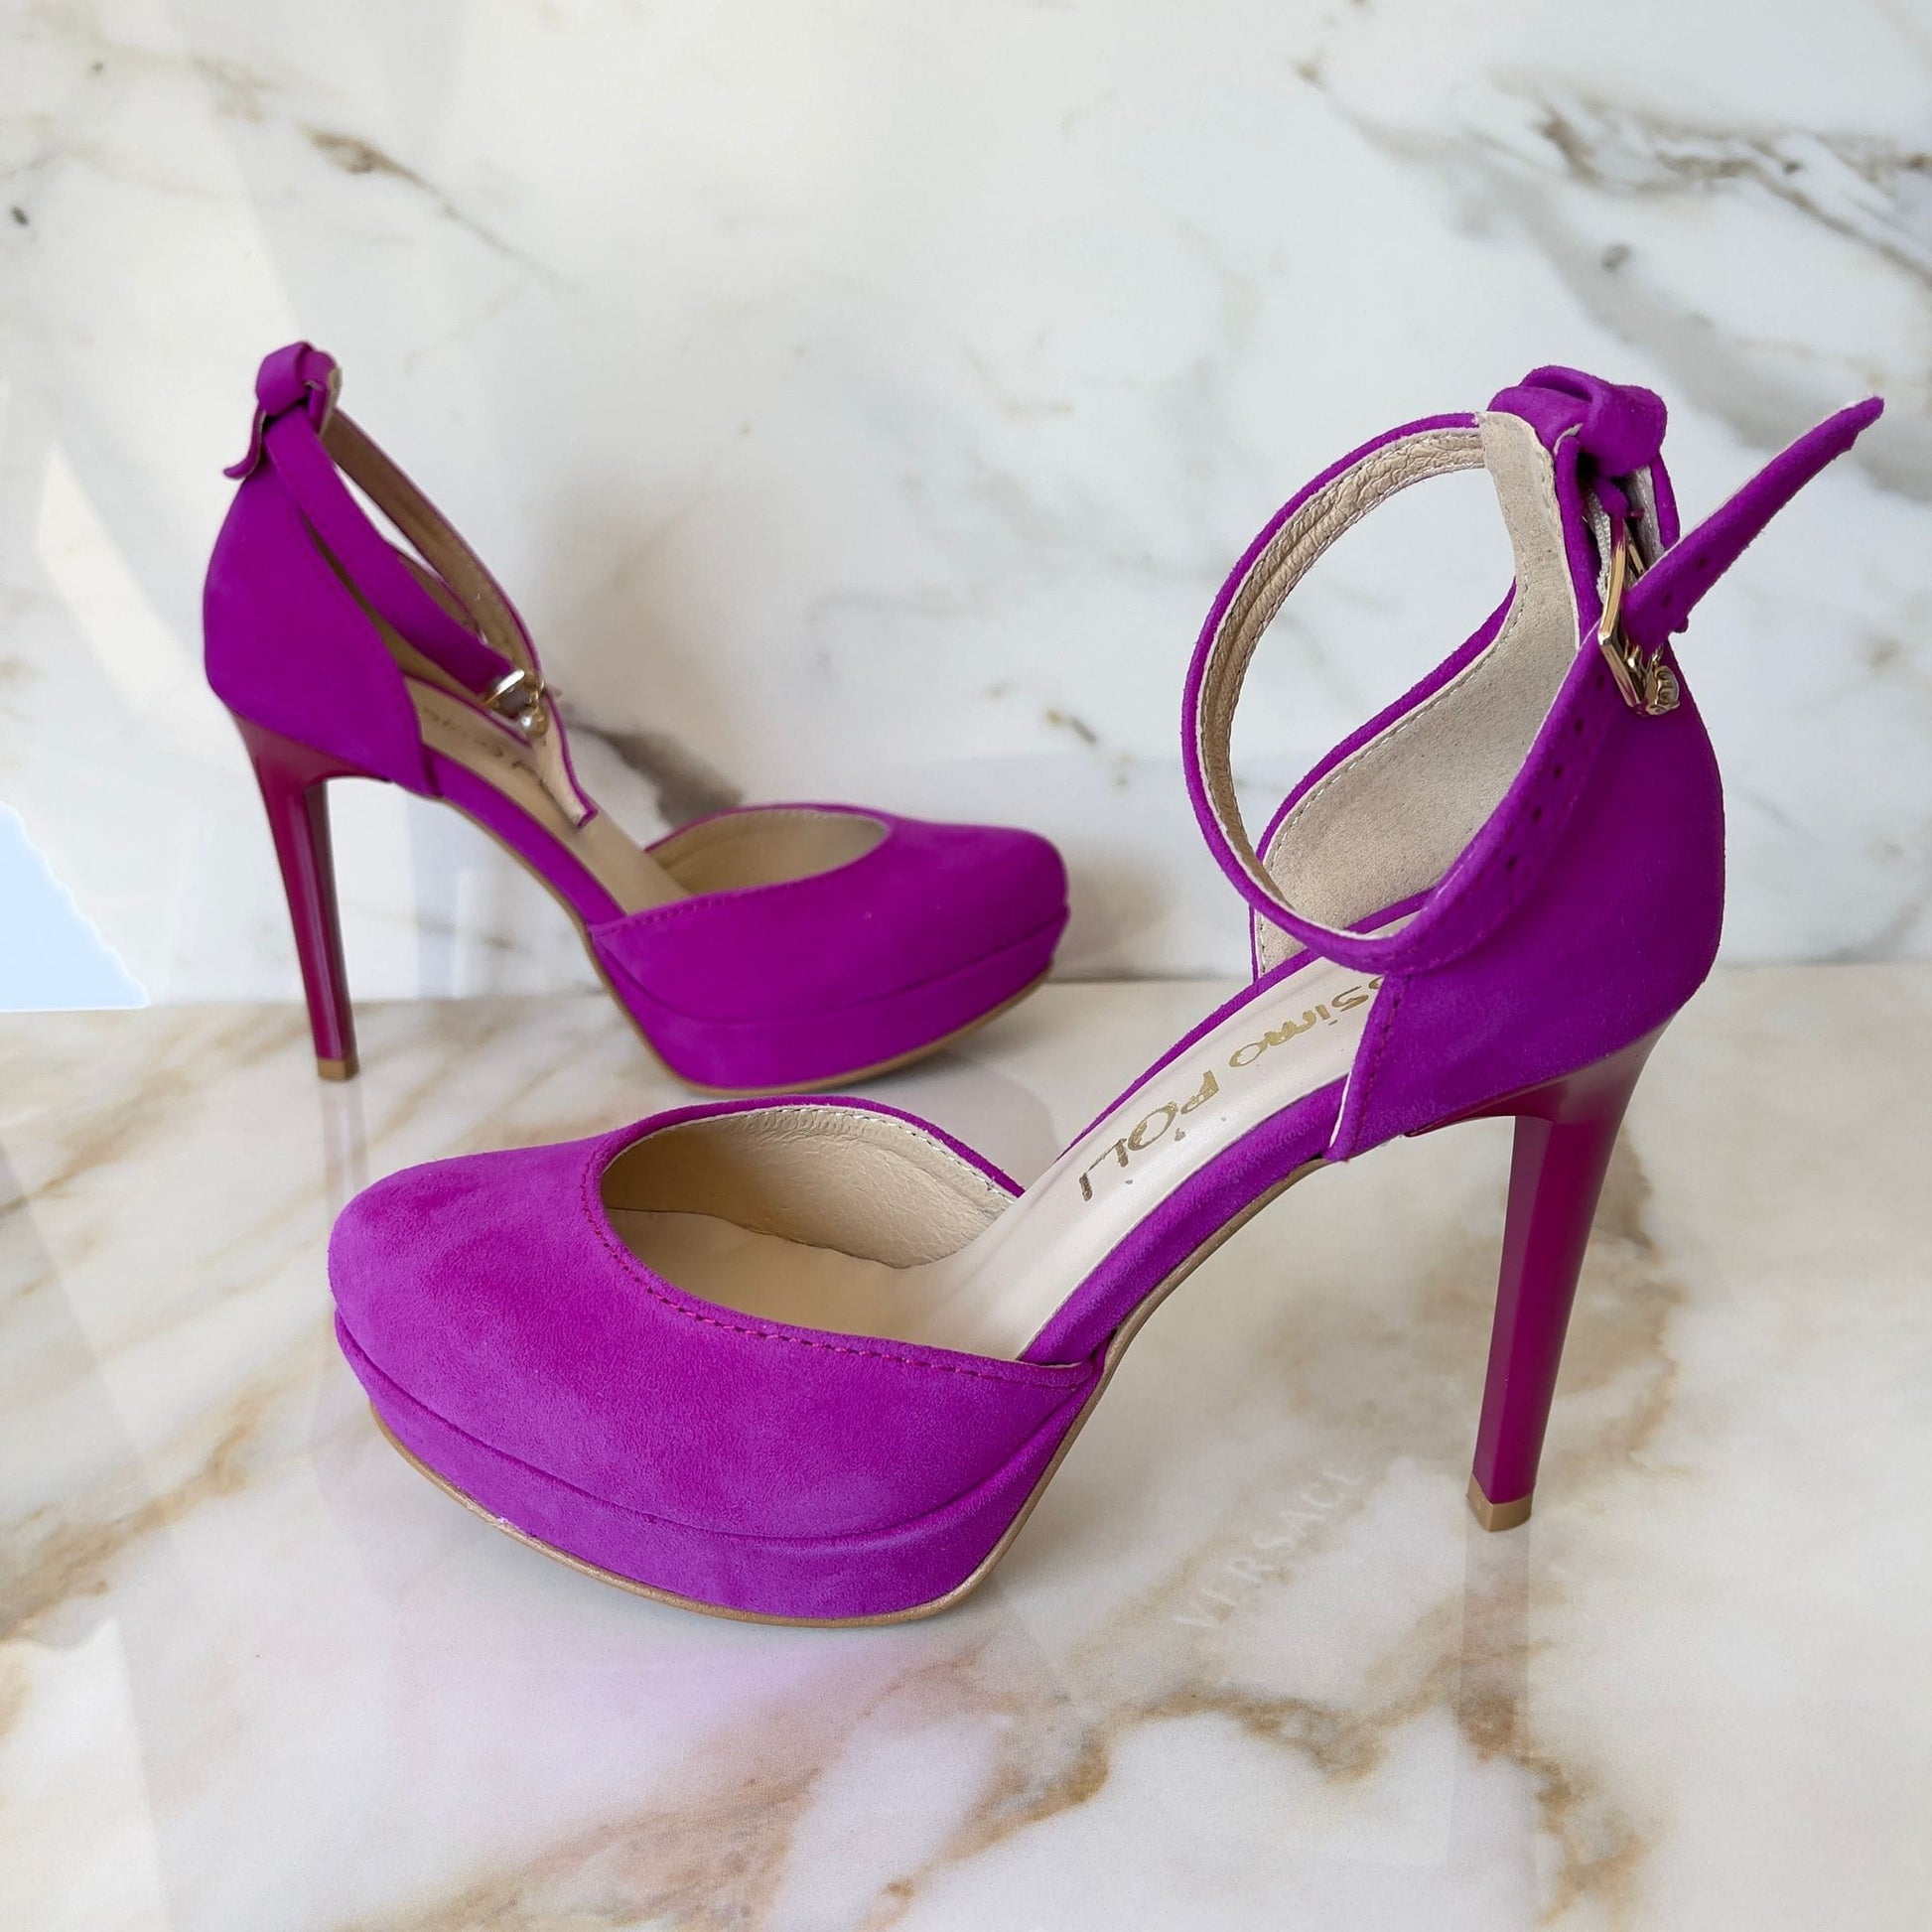 High heel platform sandals in pink suede leather